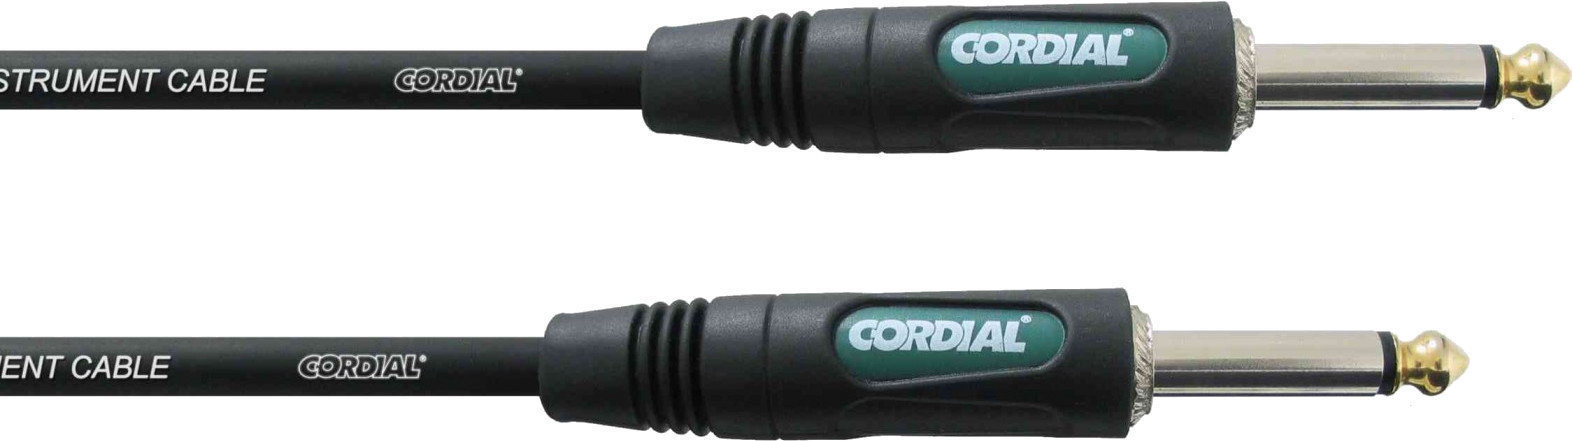 Instrument Cable Cordial CCFI 6 PP Black 6 m